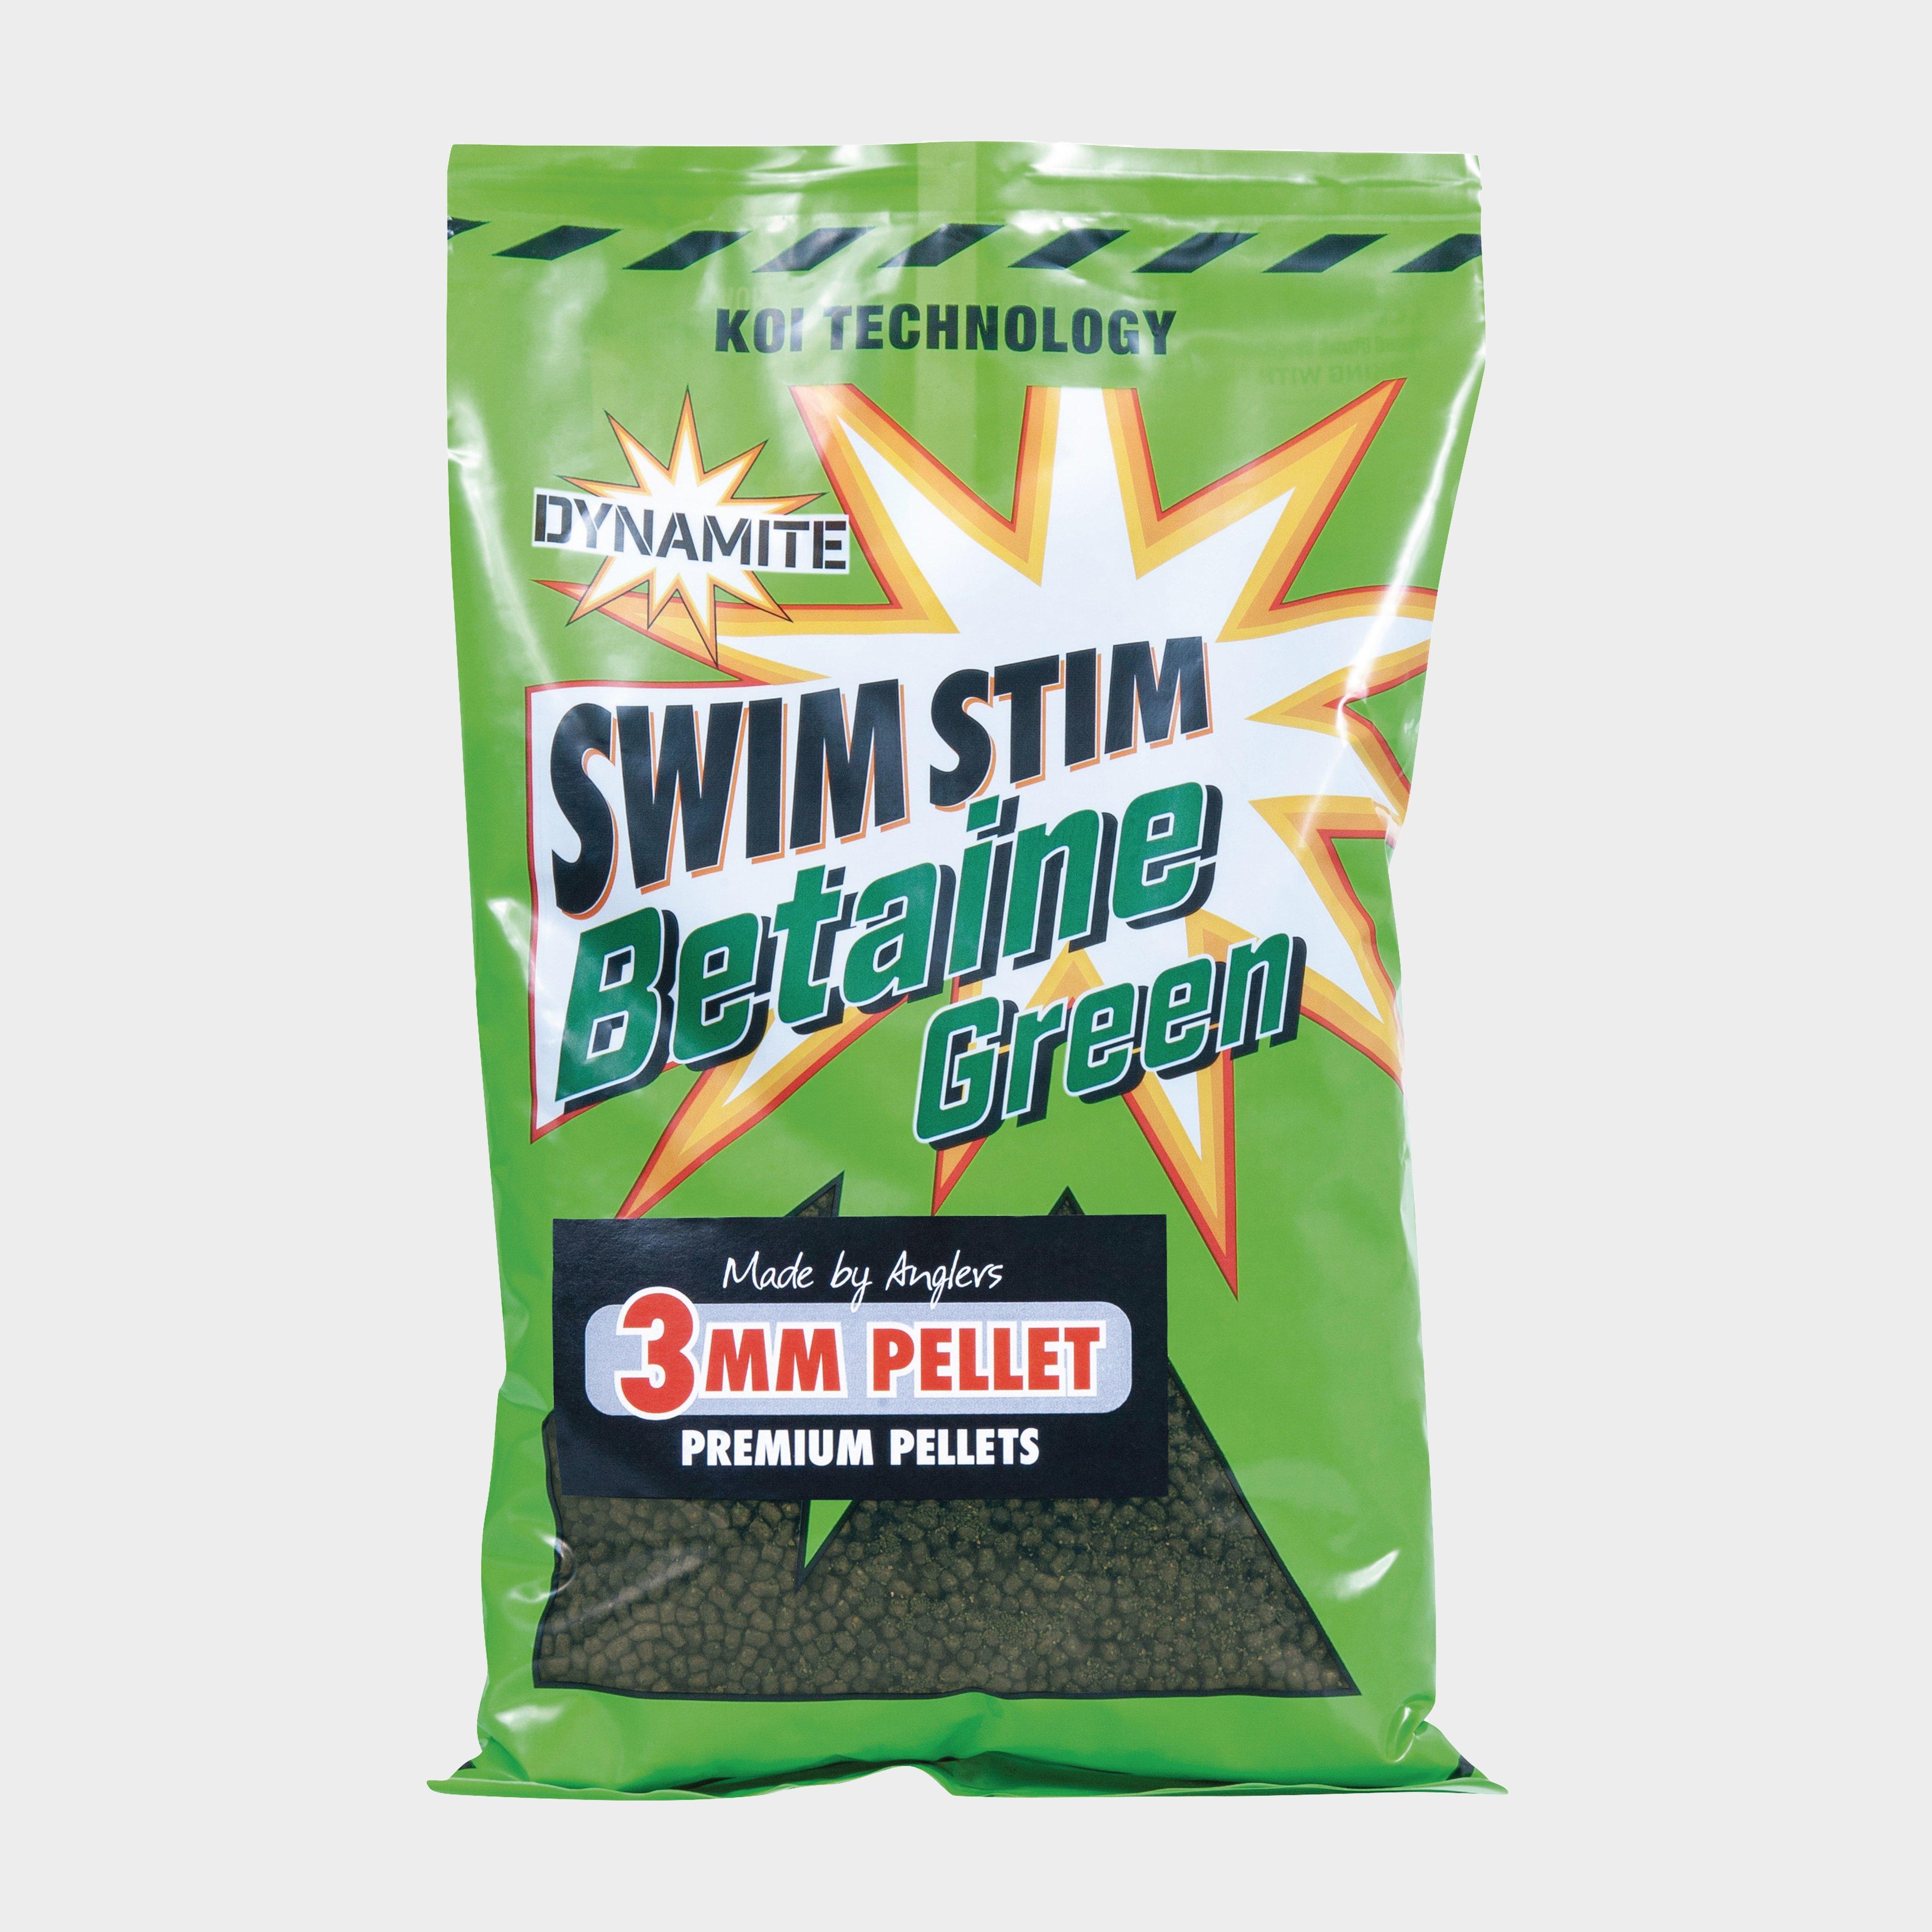 Dynamite Swim Stim Betaine Green Sinking Carp Pellets  3mm 900g - Pellet/pellet  Pellet/pellet